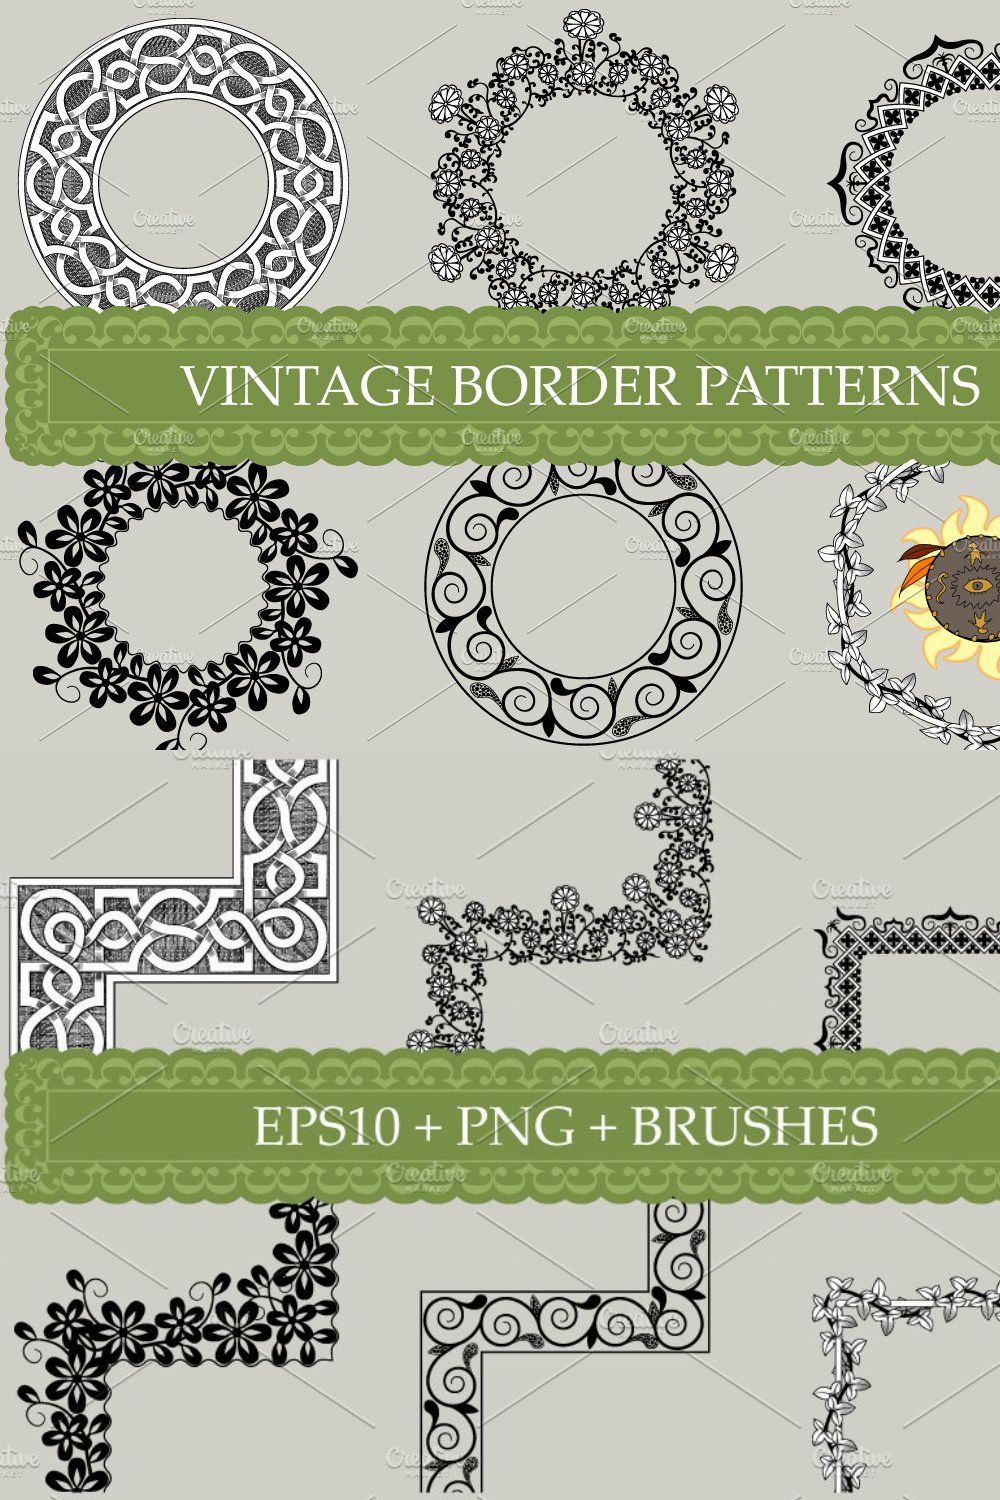 Vintage border patterns pinterest preview image.